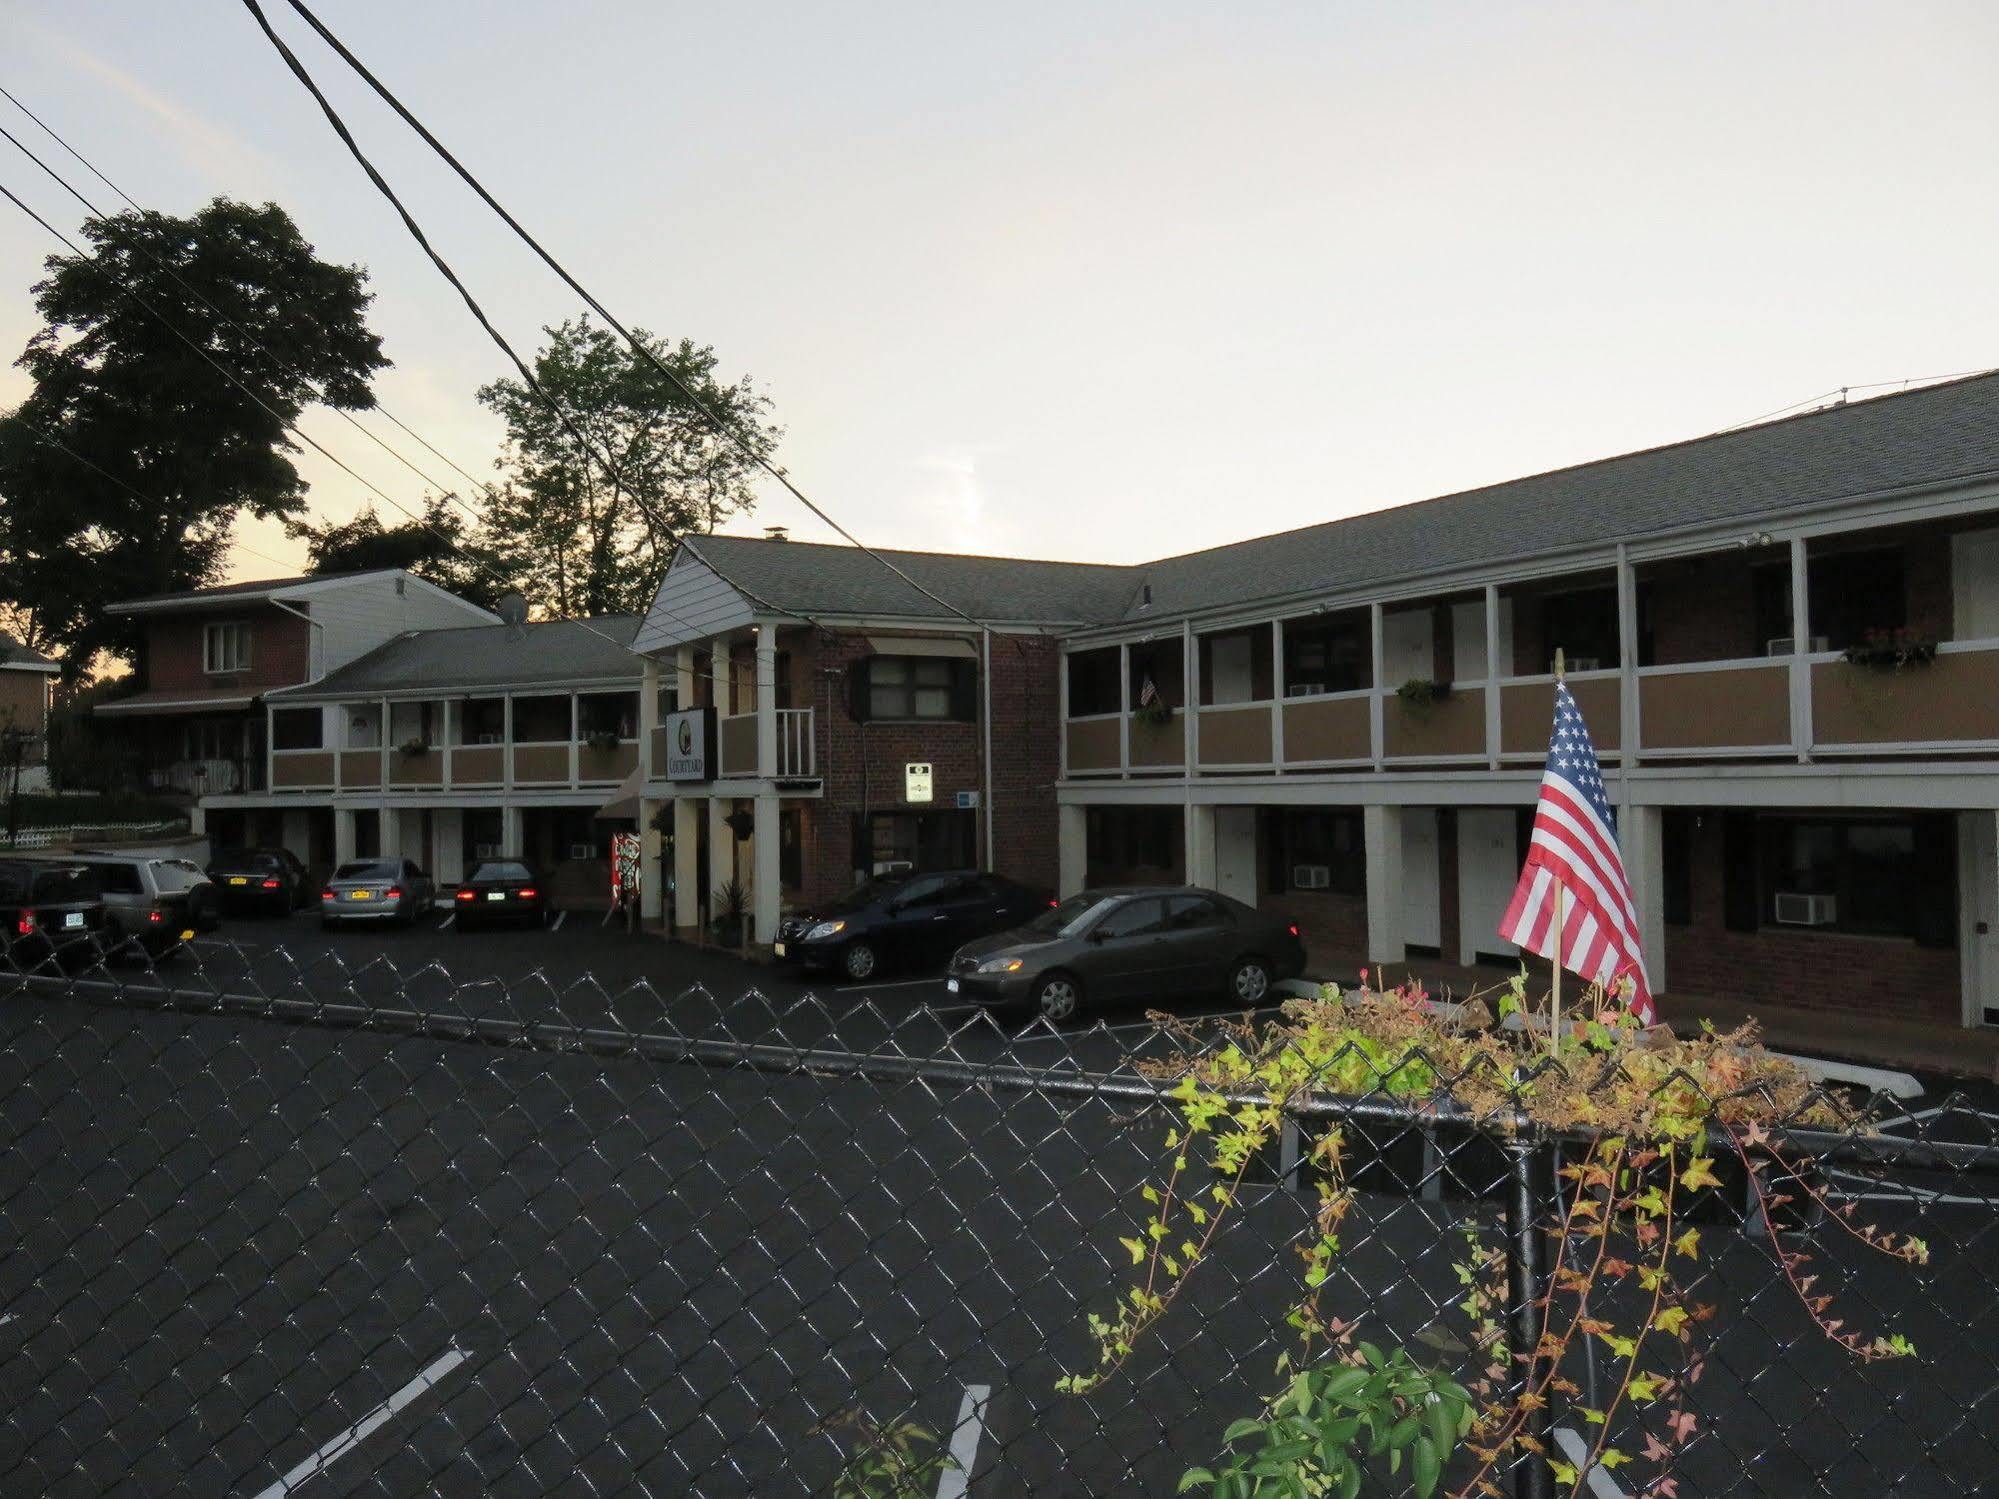 Central Motel Courtyard White Plains Exterior photo